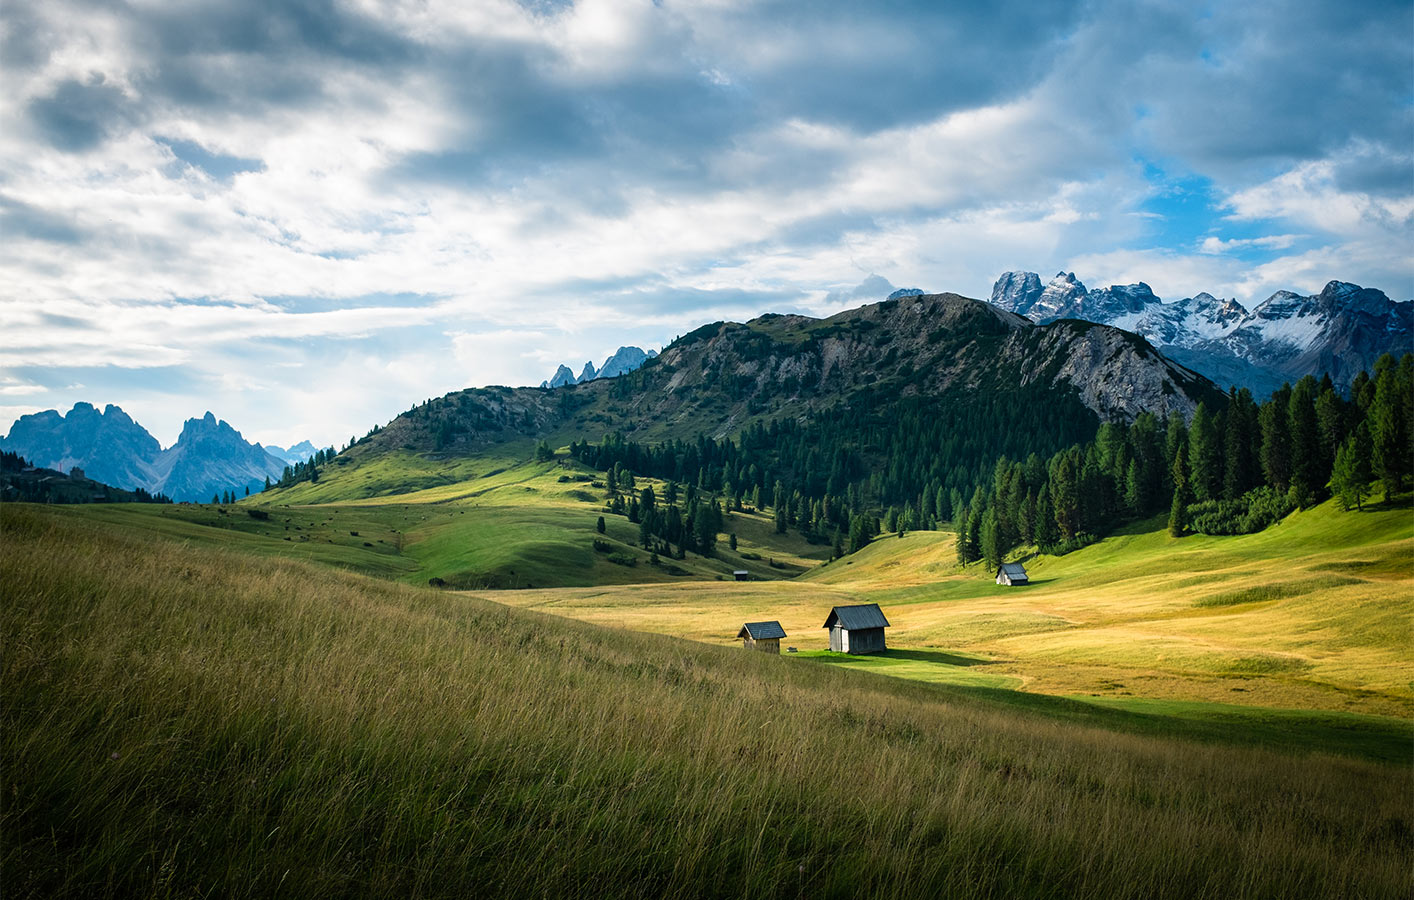 Dolomites - Pasture